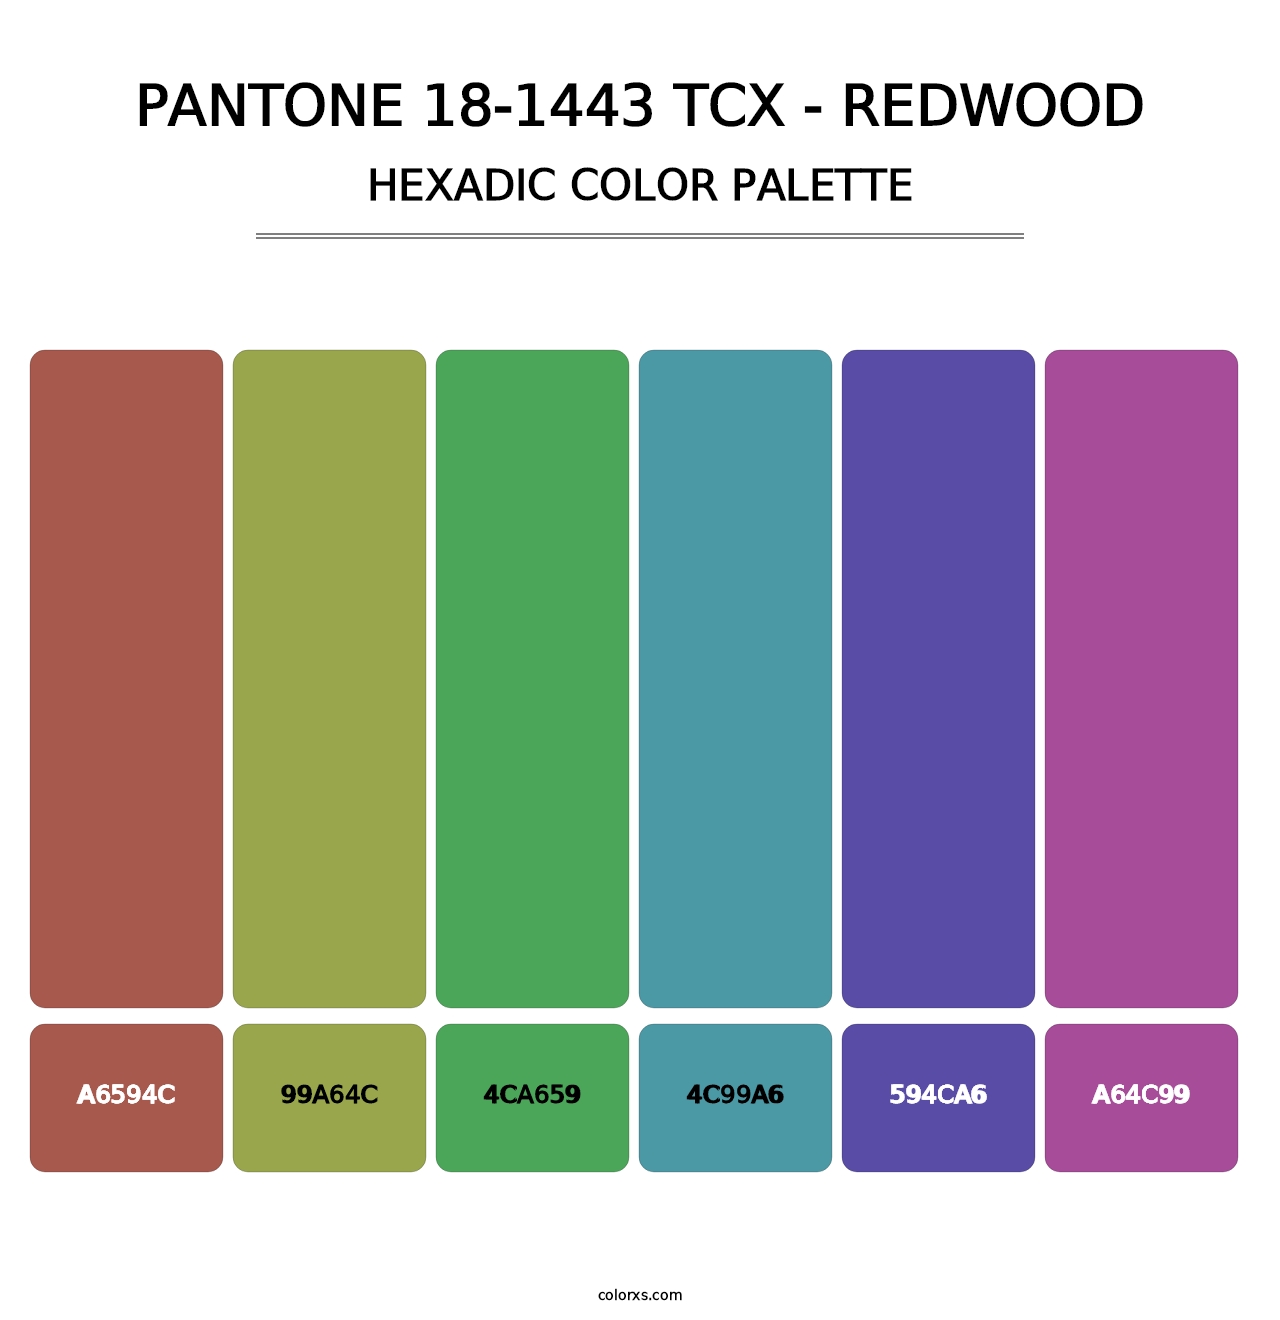 PANTONE 18-1443 TCX - Redwood - Hexadic Color Palette